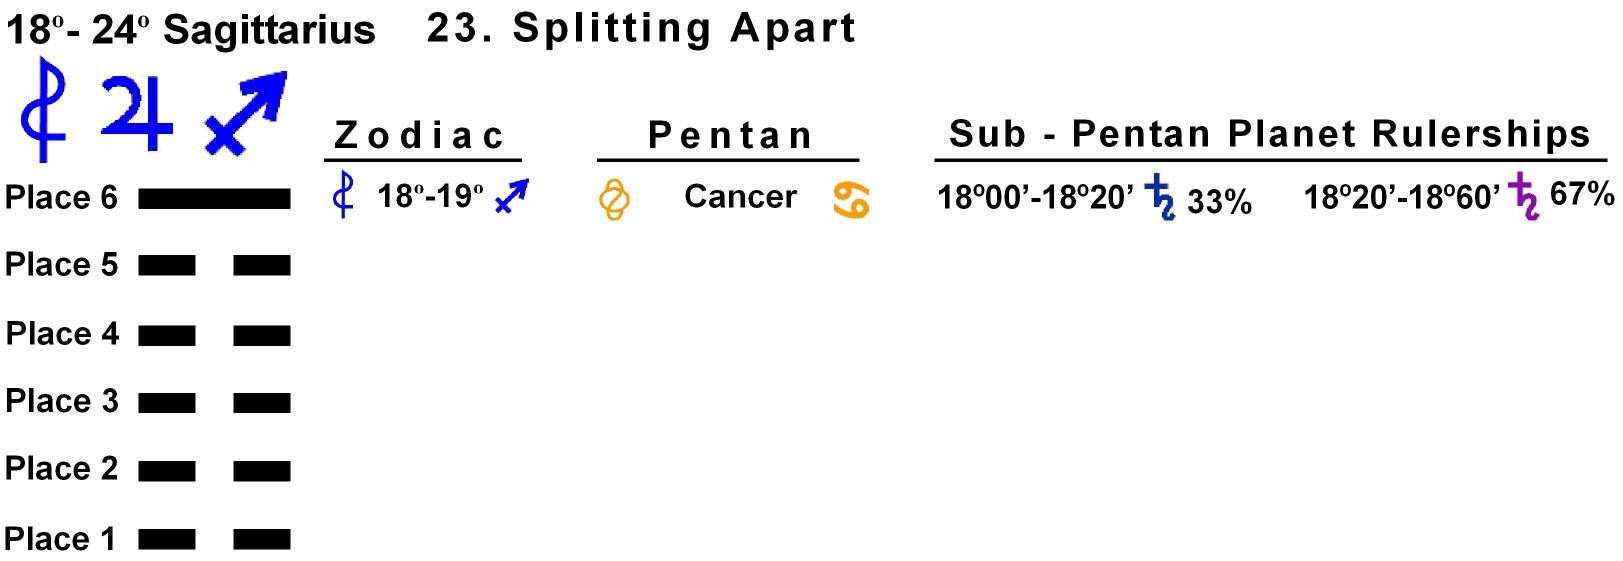 Pent-lines-09SA 18-19 Hx-23 Splitting Apart